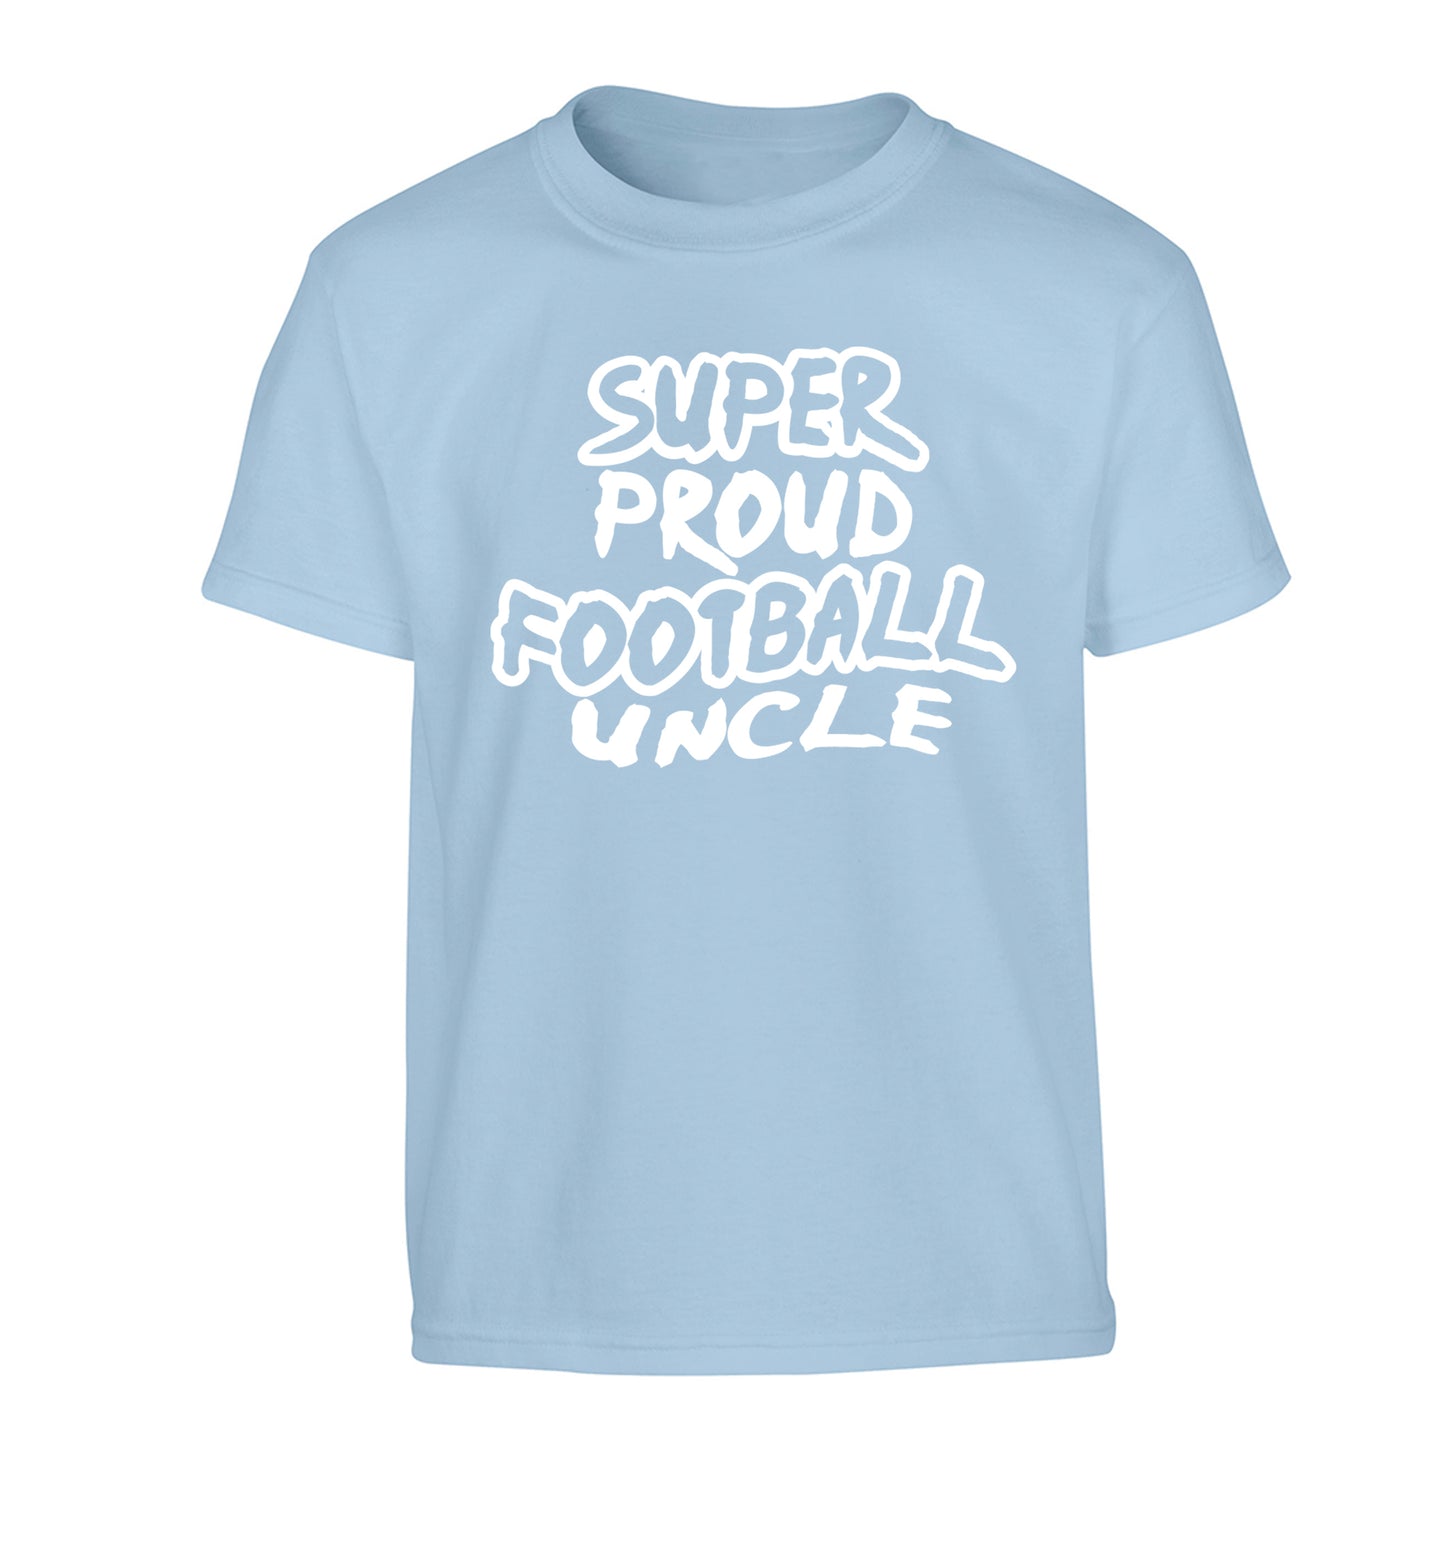 Super proud football uncle Children's light blue Tshirt 12-14 Years